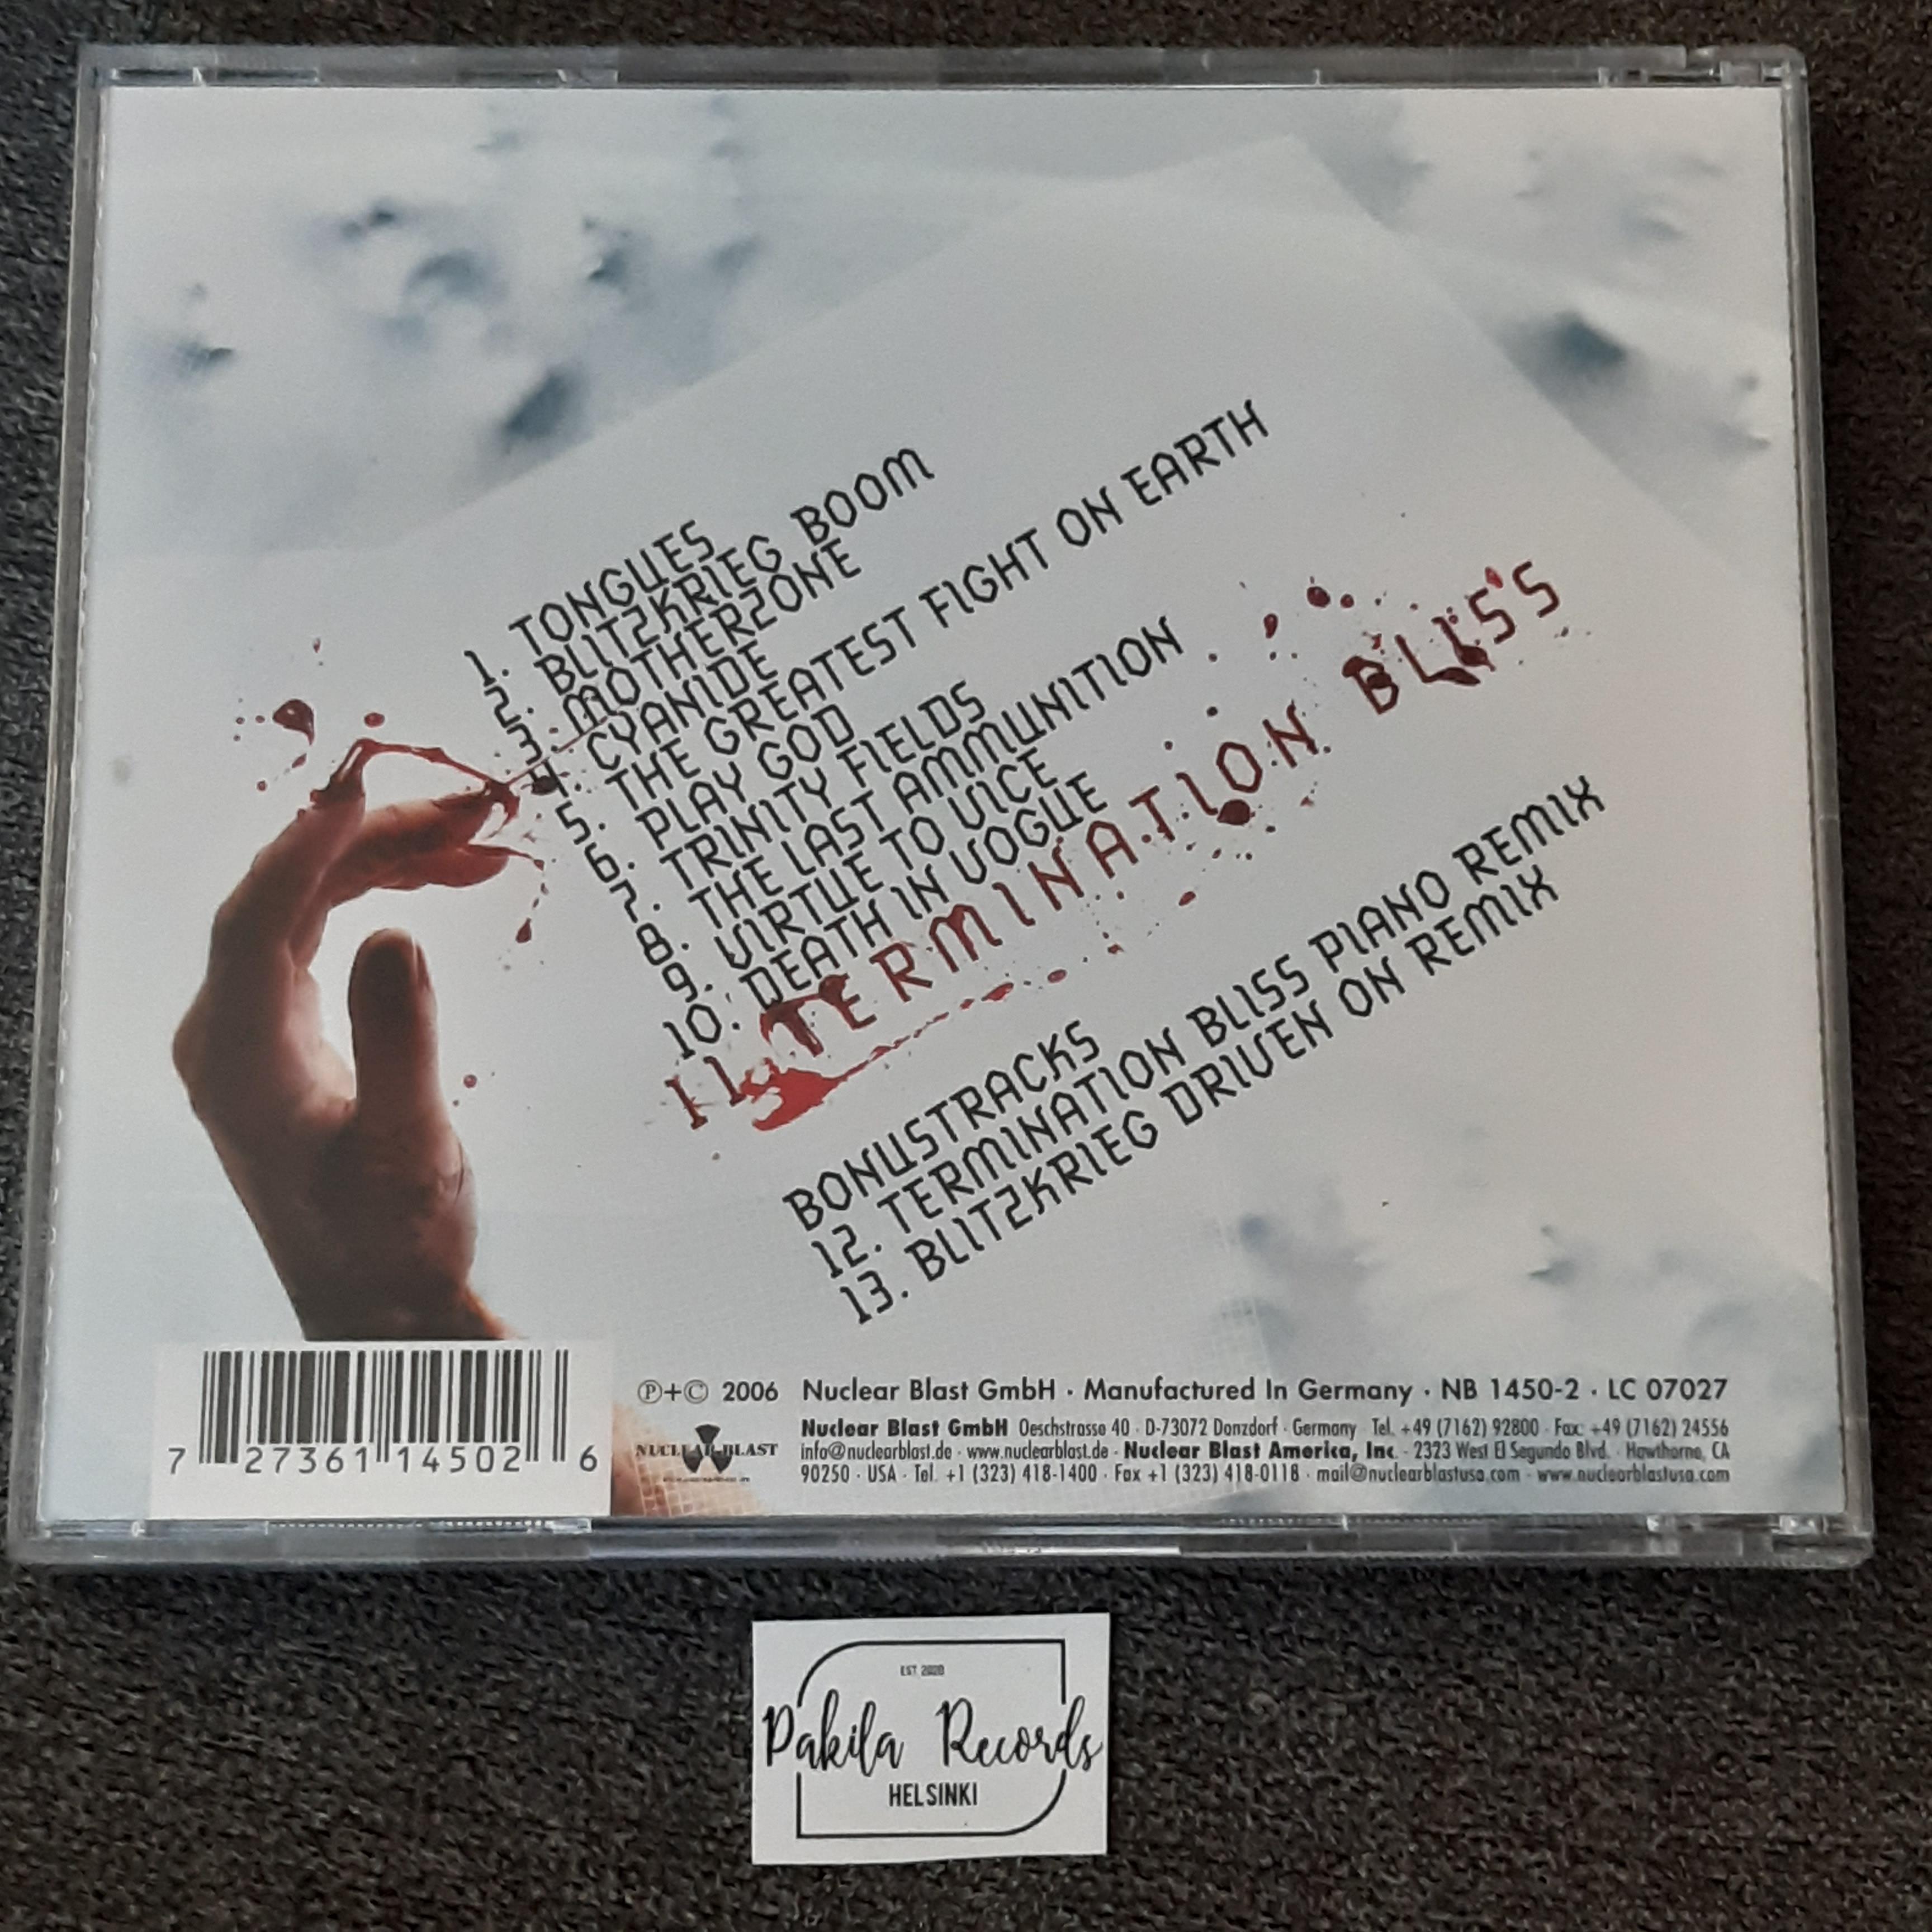 Deathstars - Termination Bliss - CD (käytetty)